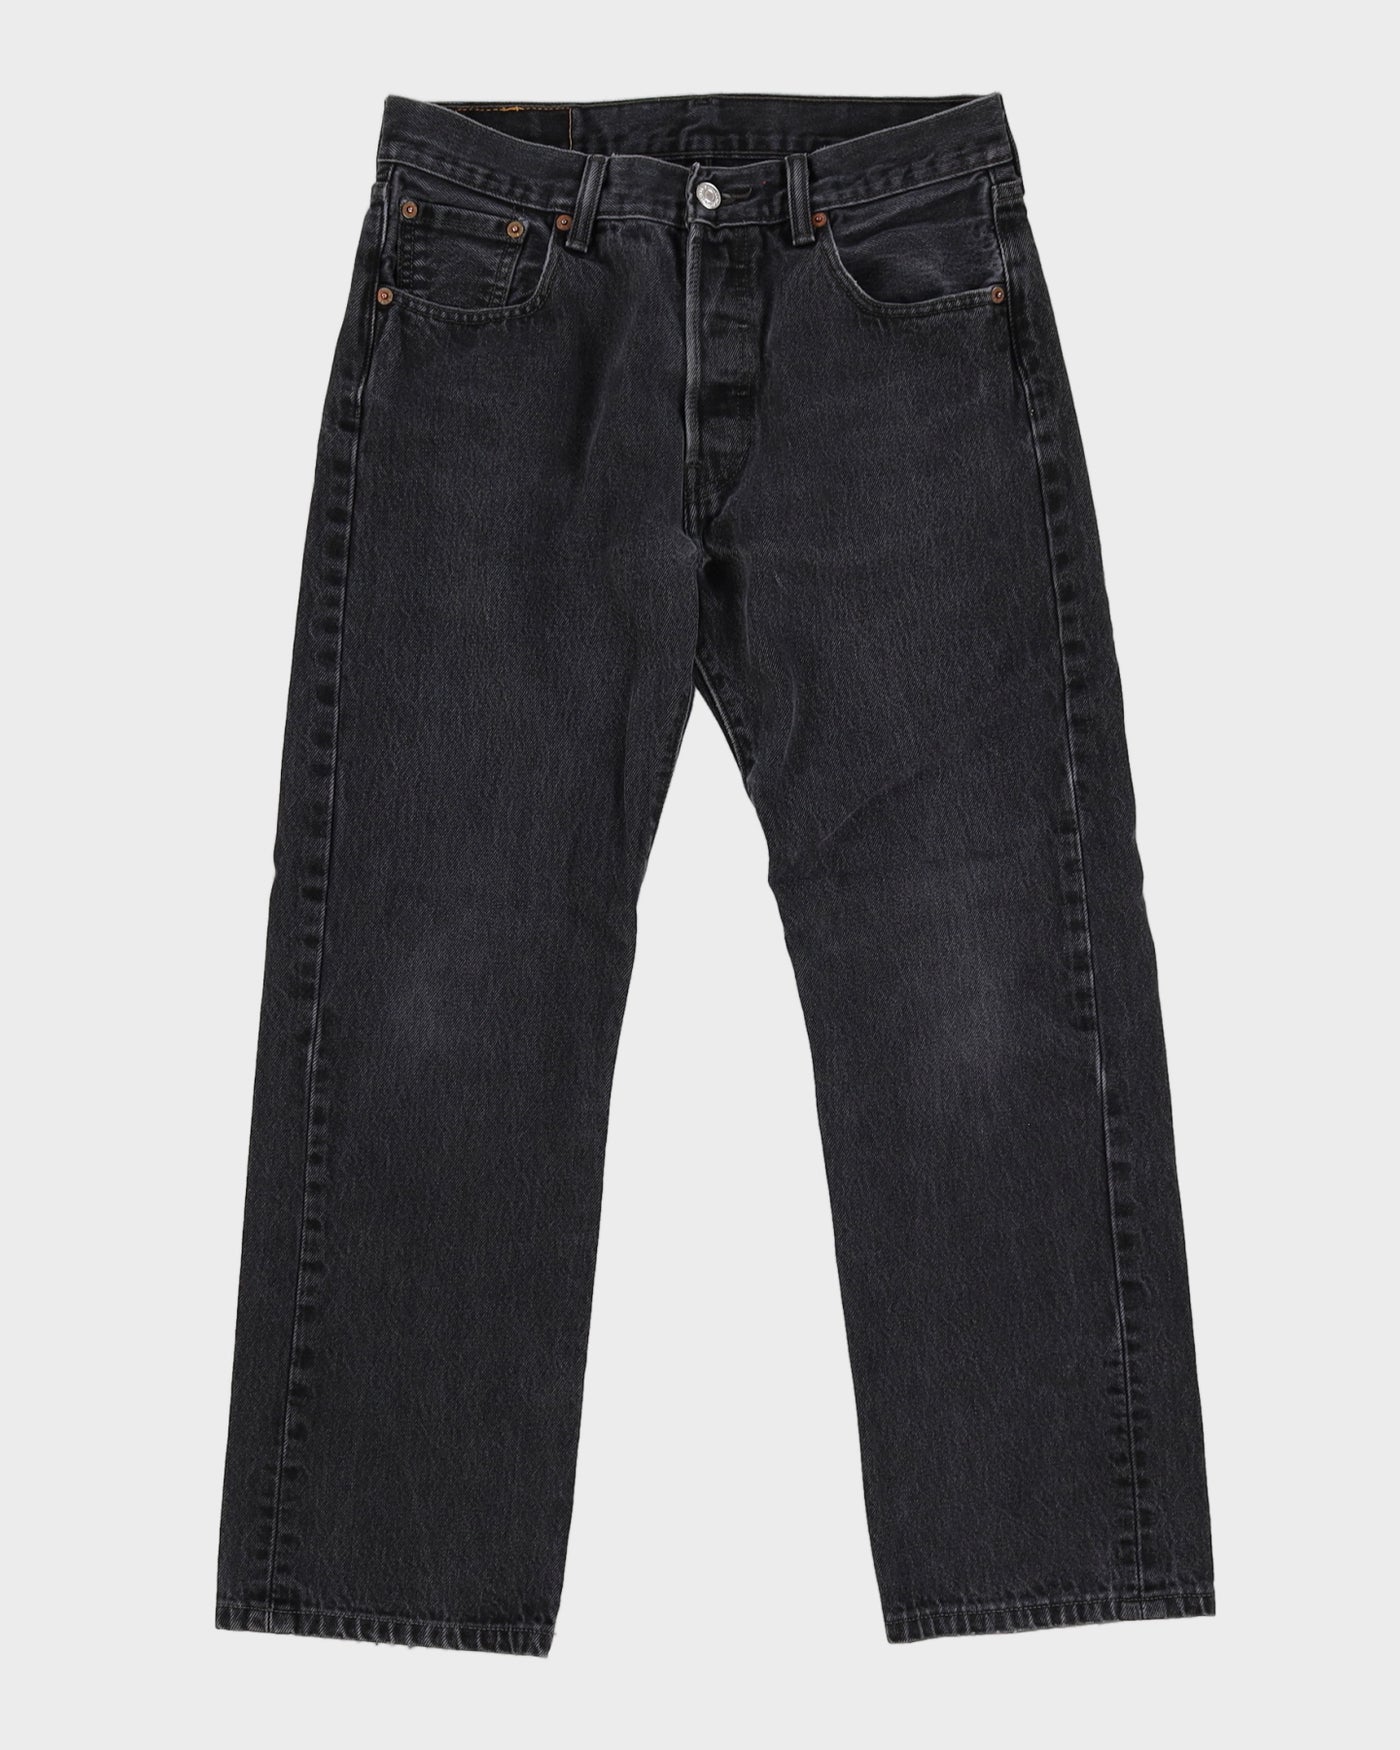 Levi's 501 Black Jeans - W30 L26